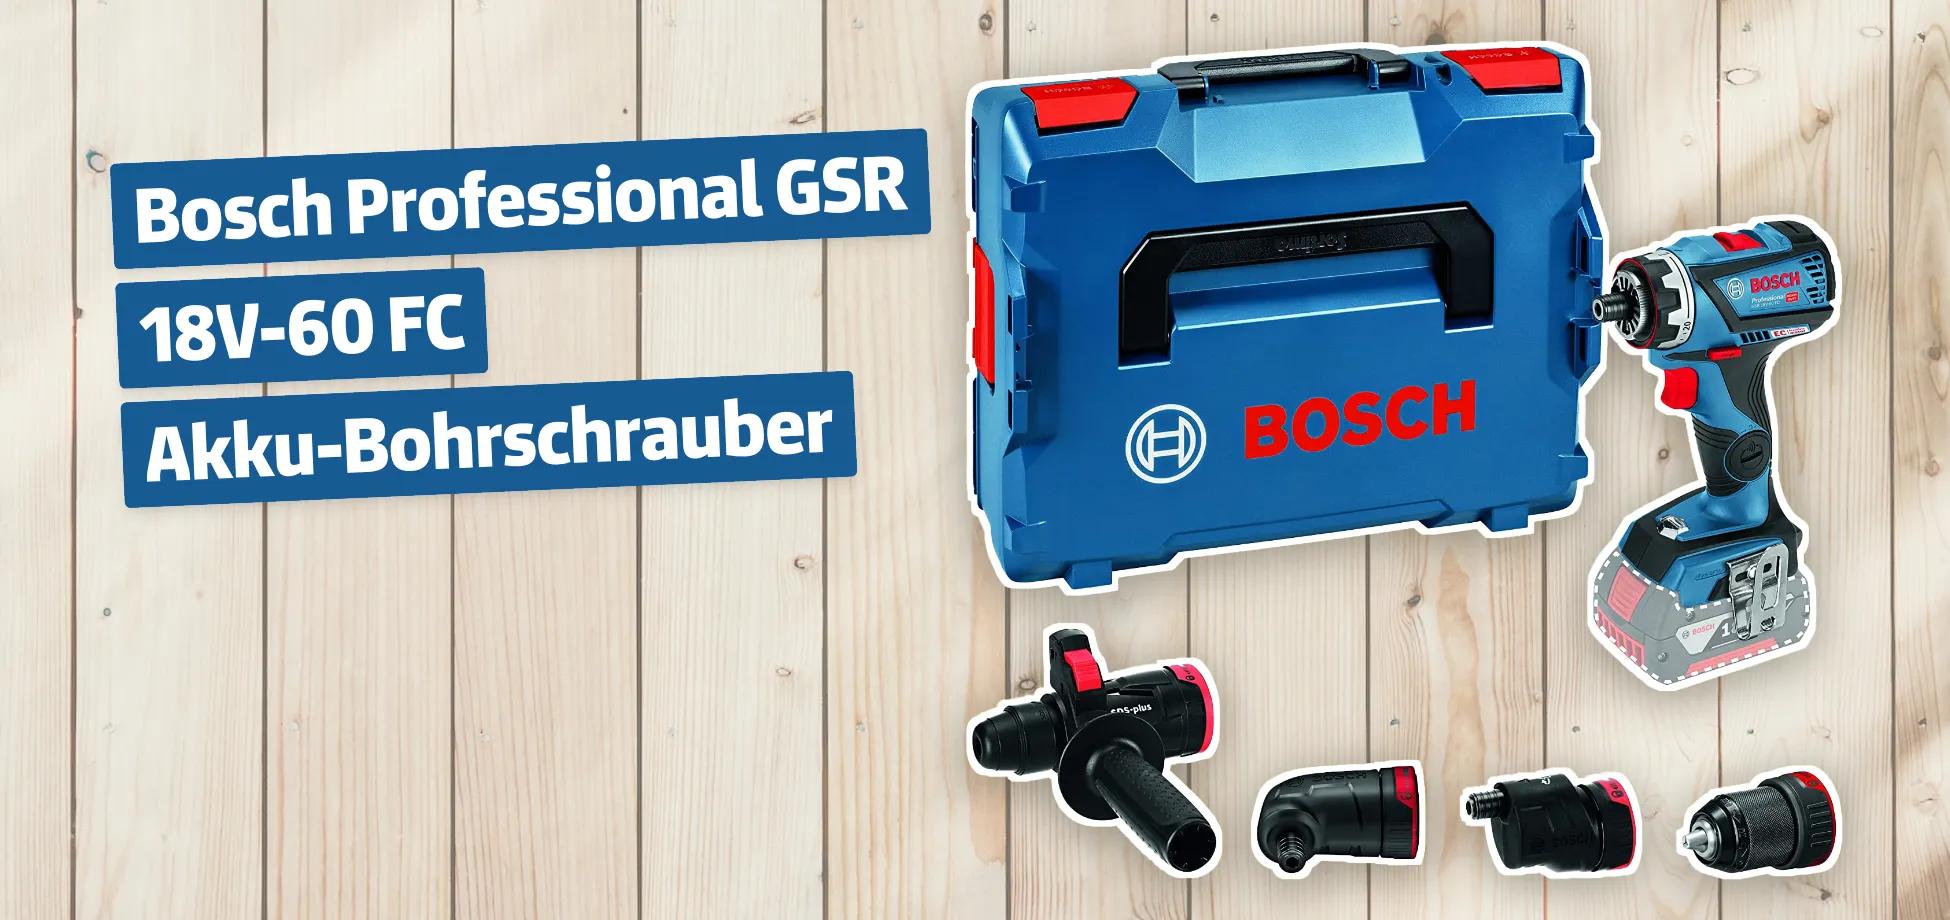 Bosch Professional GSR 18V-60 FC Akku-Bohrschrauber